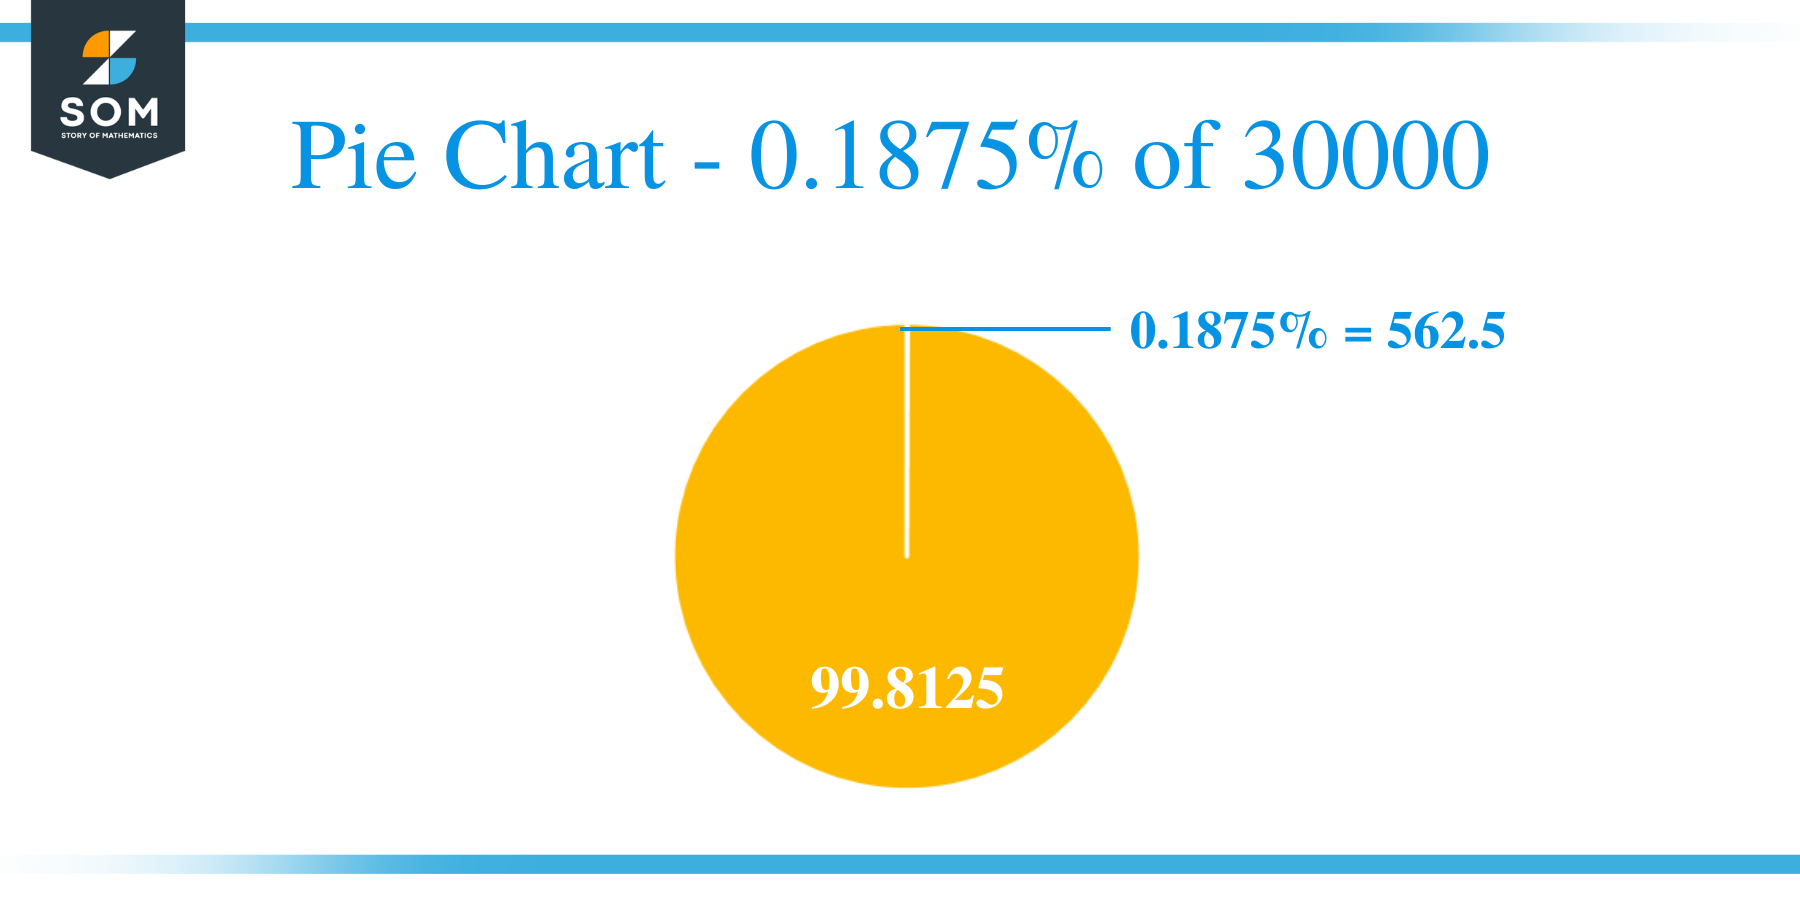 Pie Chart - 0.1875% of 30000